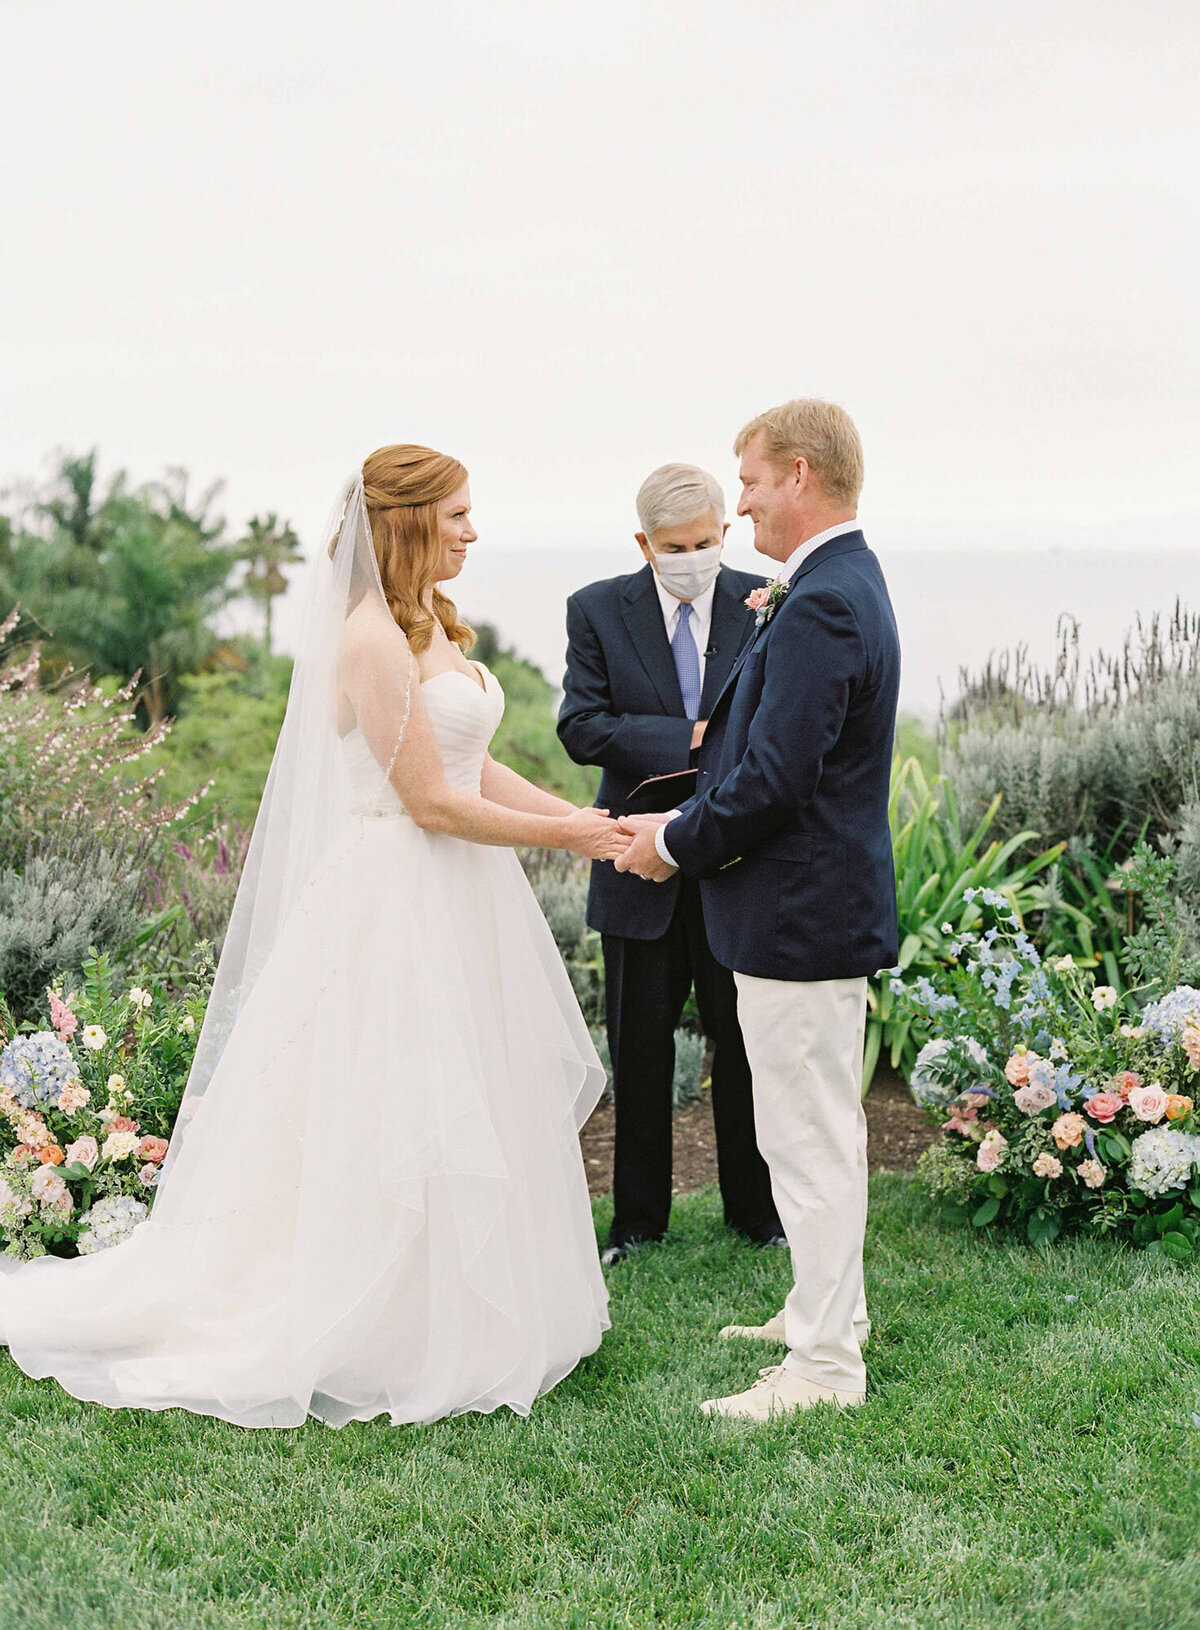 16santa-barbara-estate-wedding-planner-wedding-vows-ocean-front-officiant-ceremony-flowers-blue-hydrangea